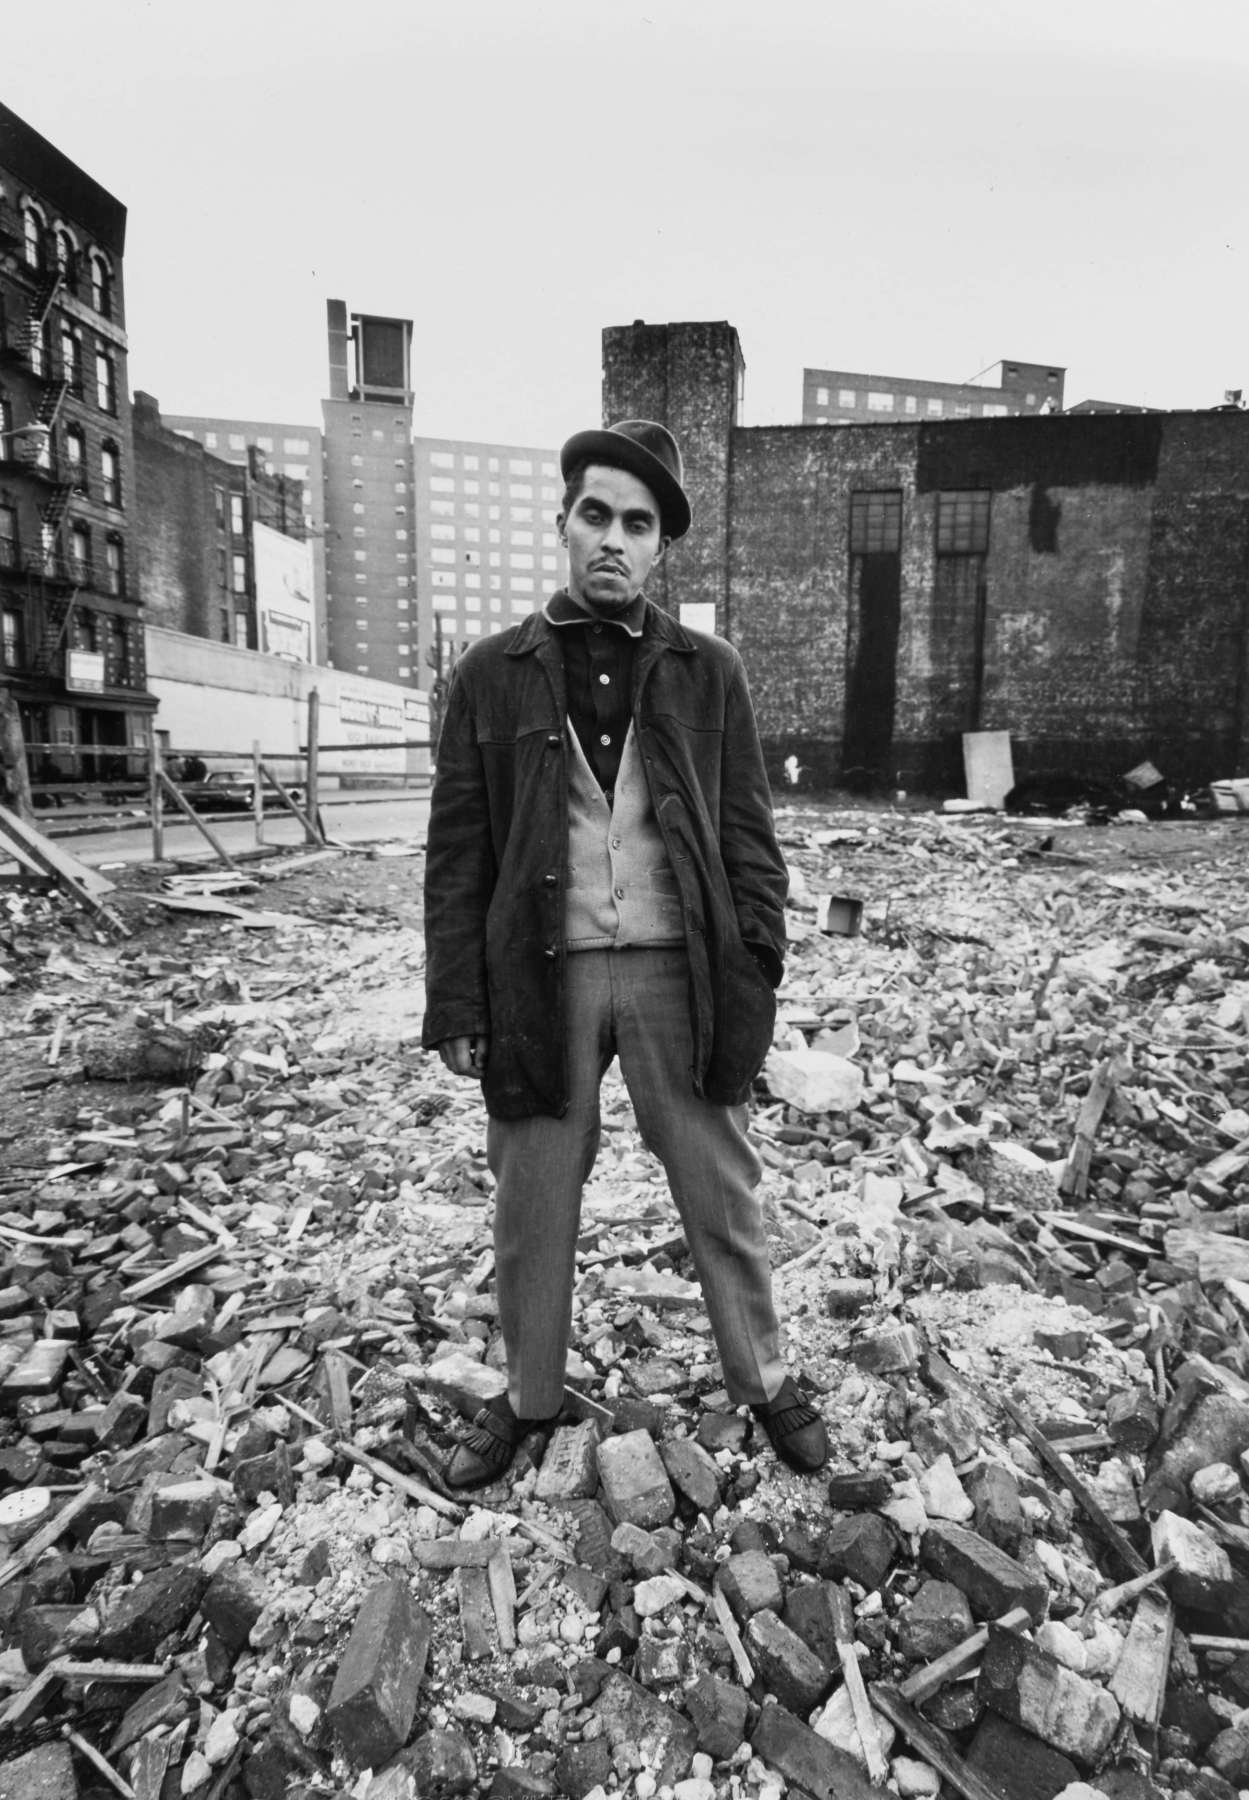 Bruce Davidson, Untitled, East 100th Street, New York, 1966 